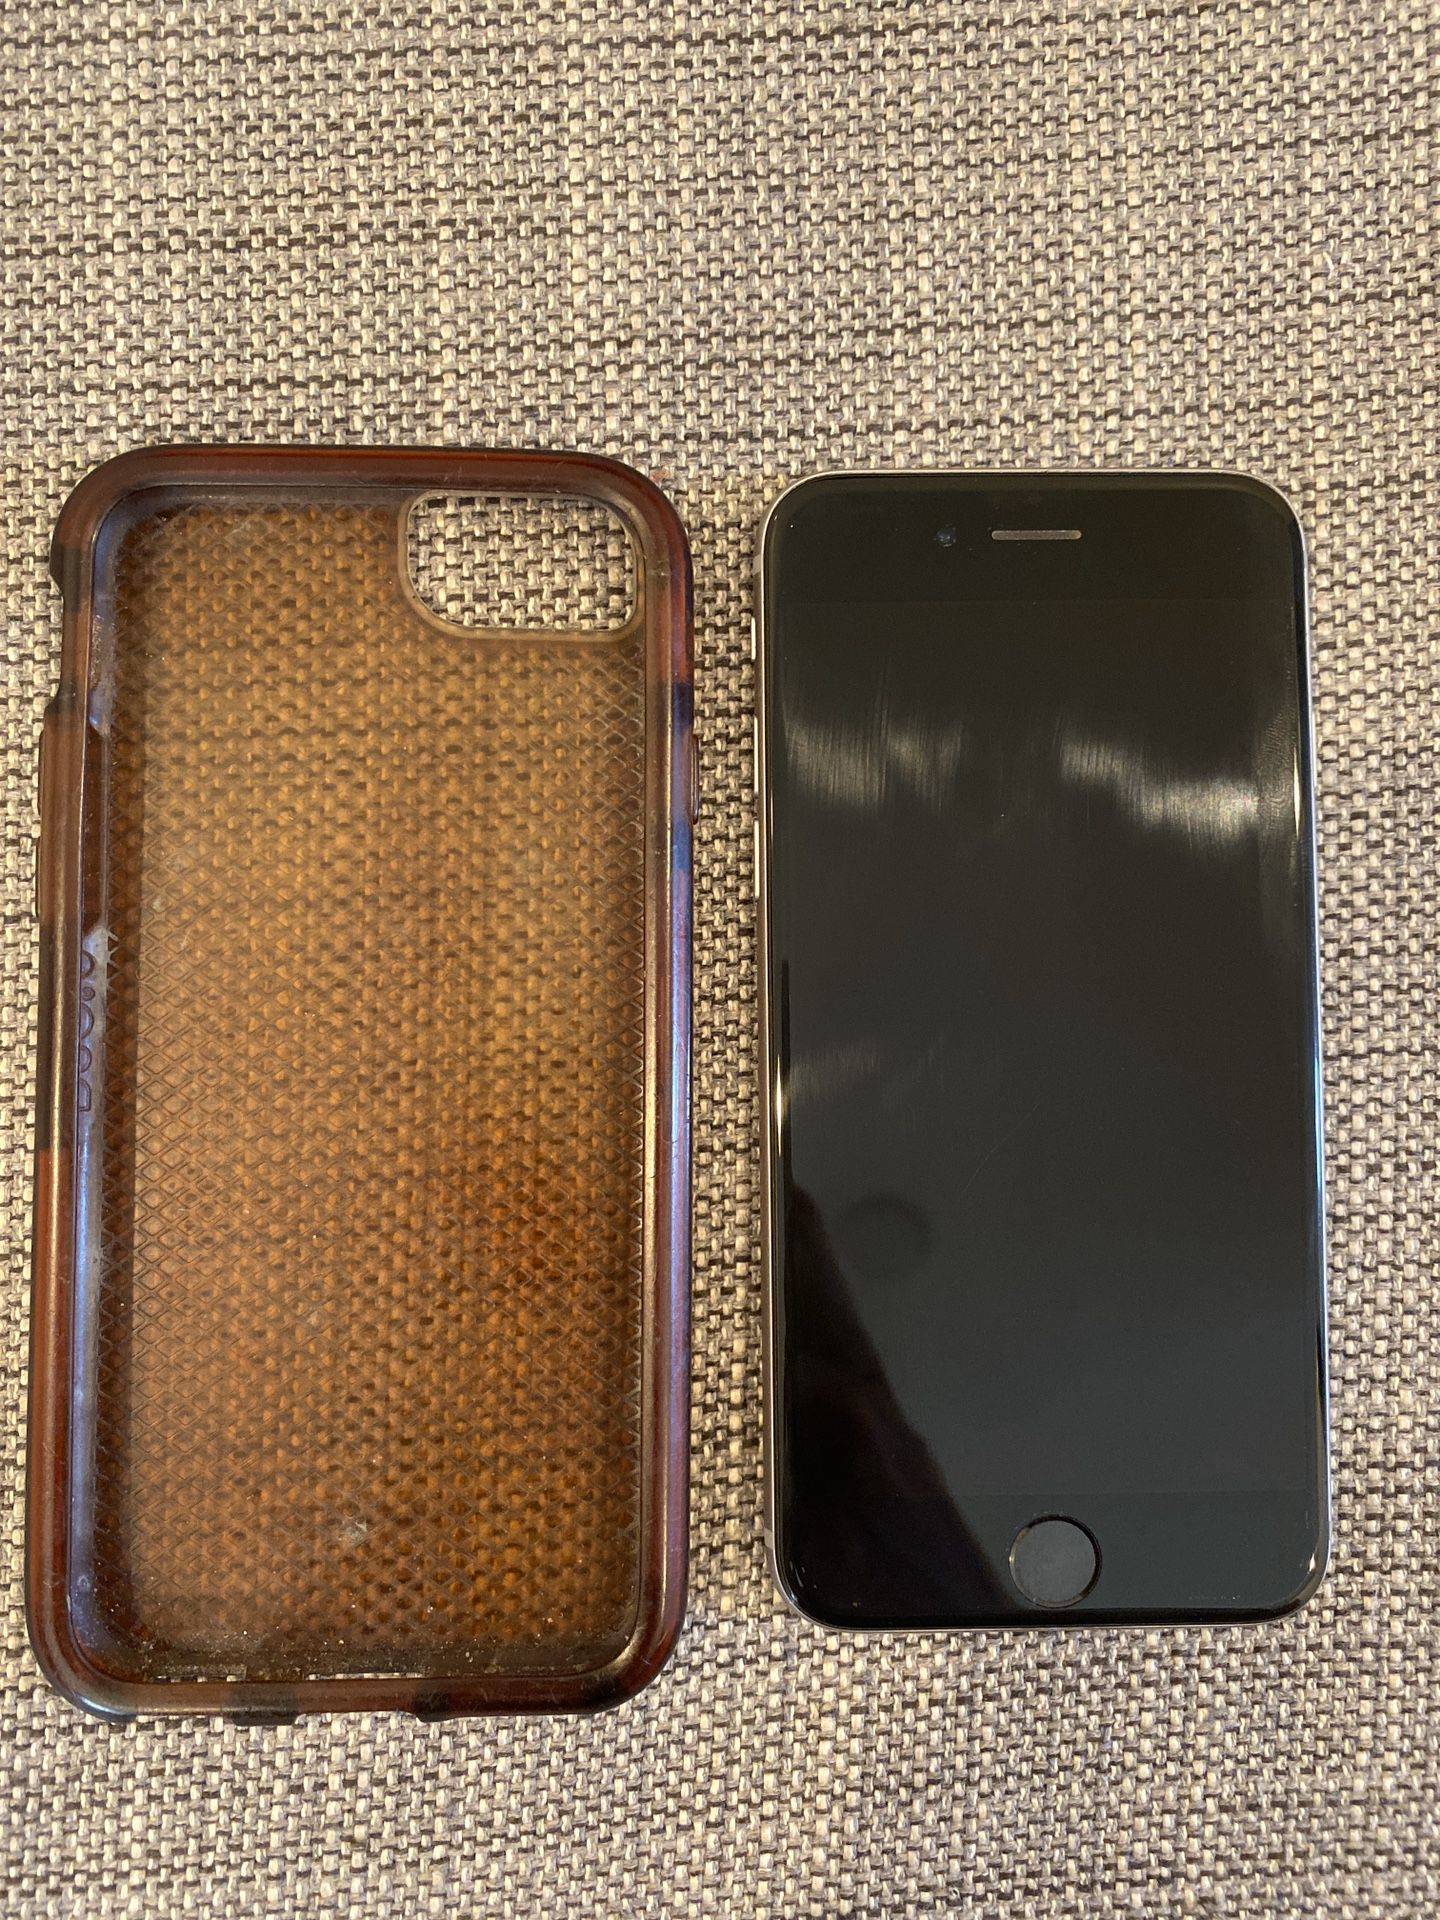 iPhone 6 + case *Excellent condition*